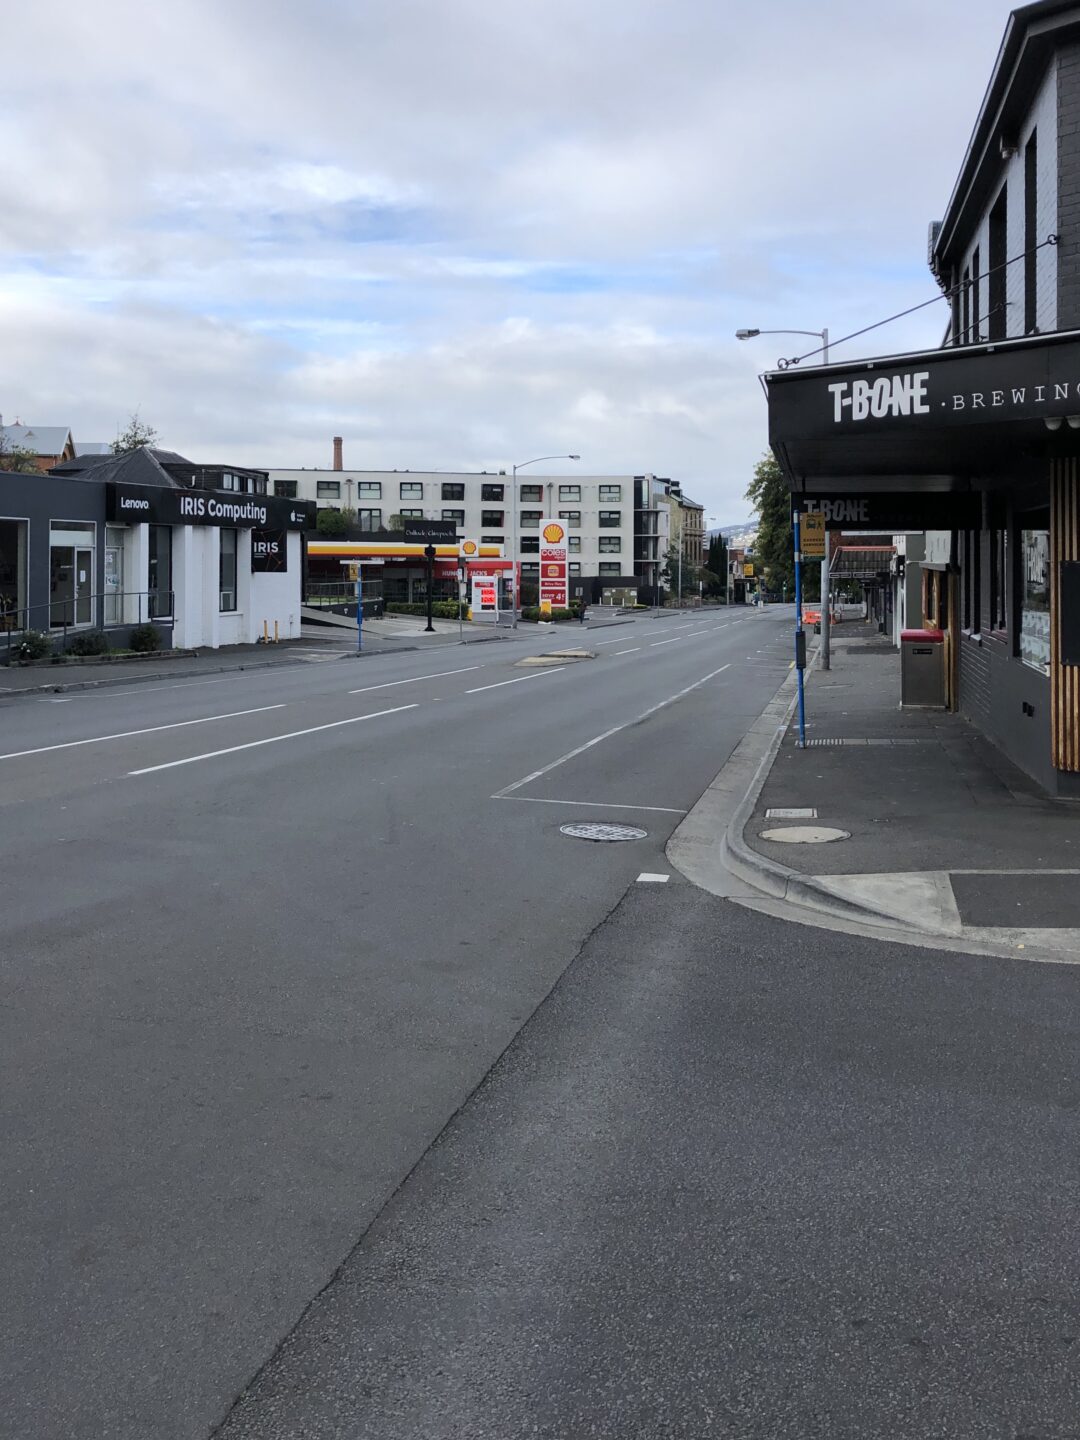 an empty street scape